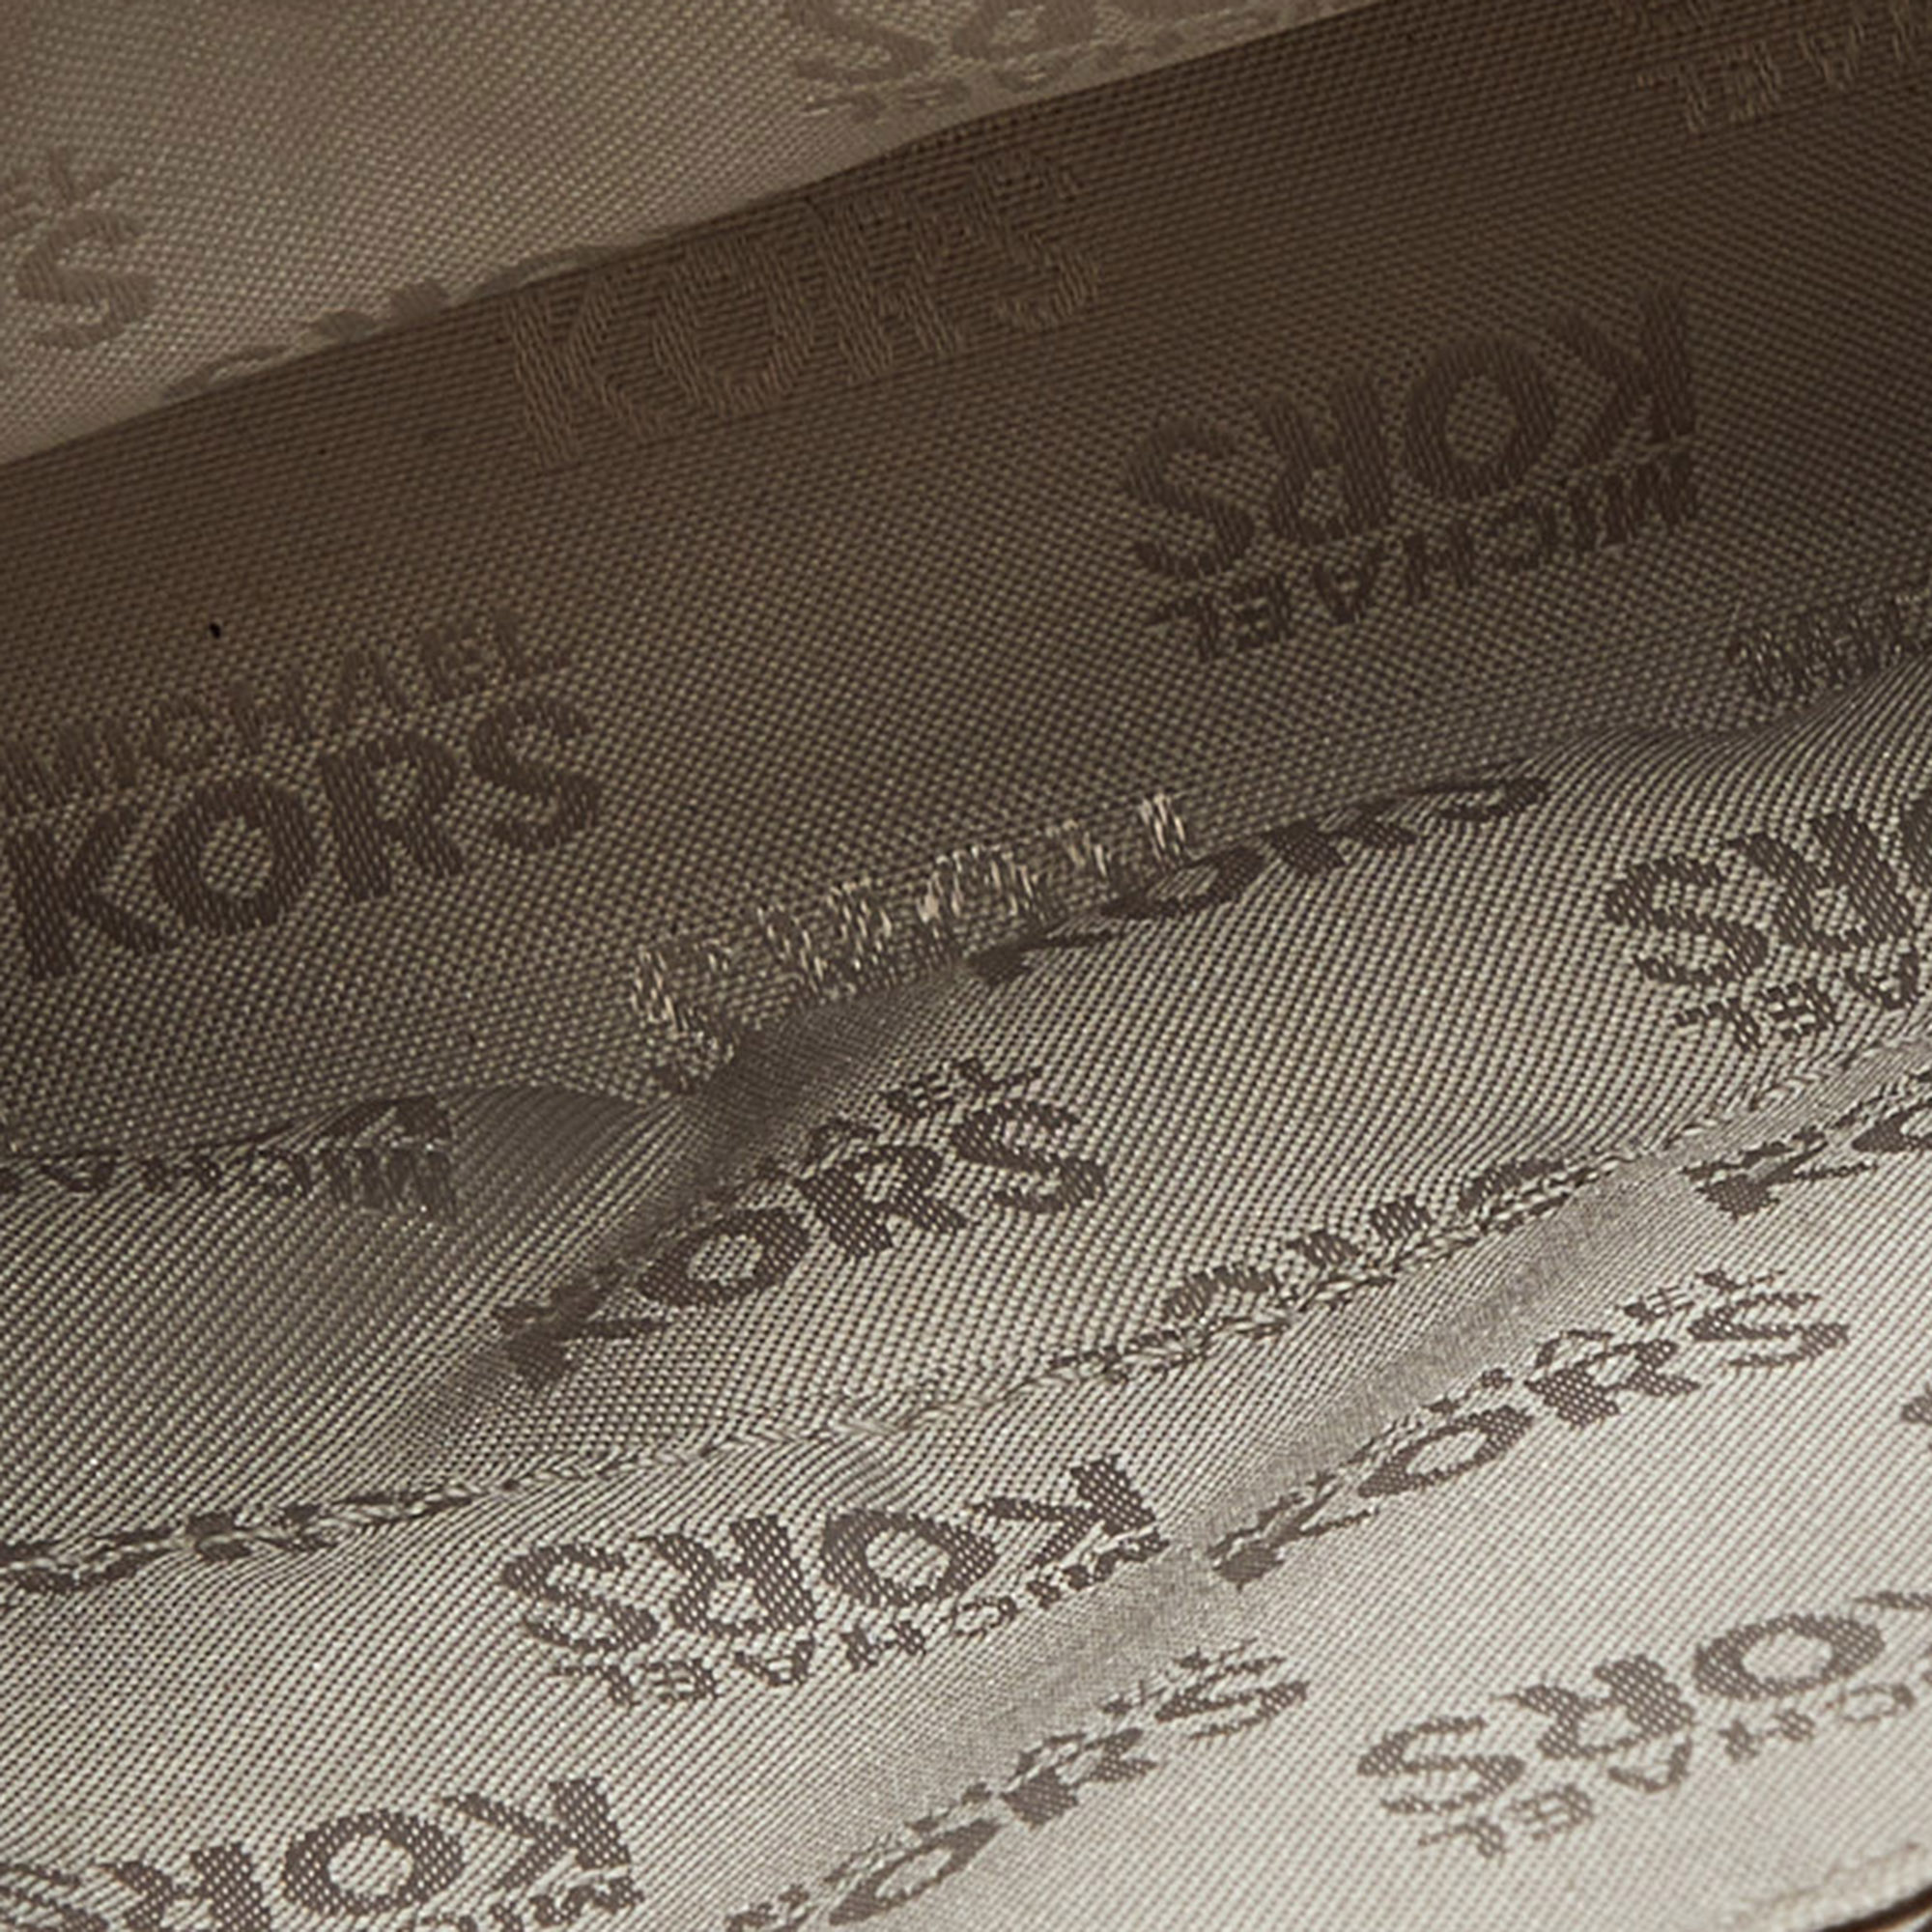 Michael Kors Beige/Brown Python Embossed Leather Chain Shoulder Bag